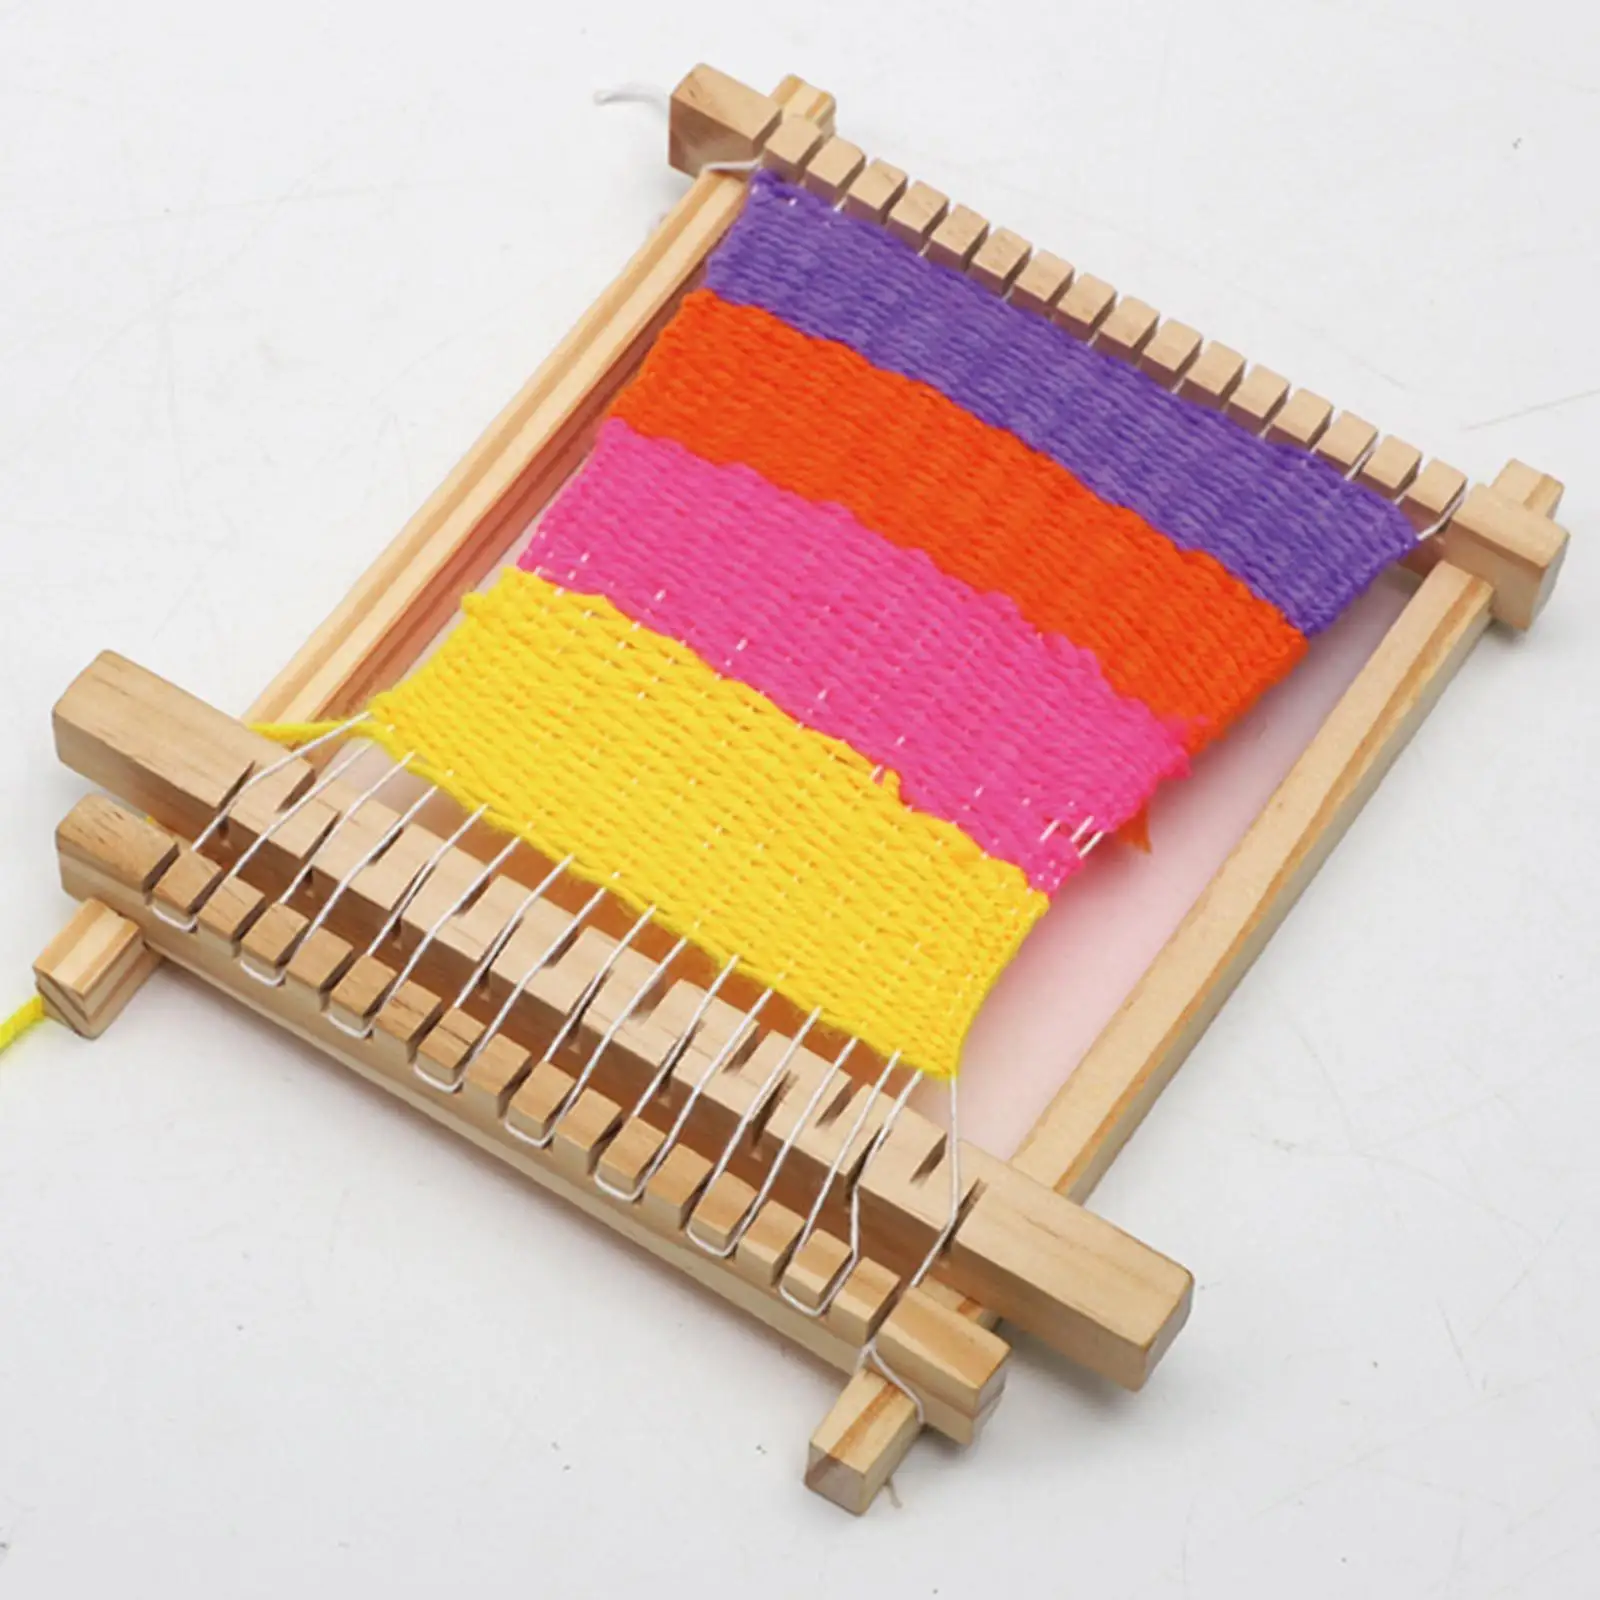 Kids Wooden Weaving Loom, Handcraft Weaving Loom, Hands on Skills for Knitted